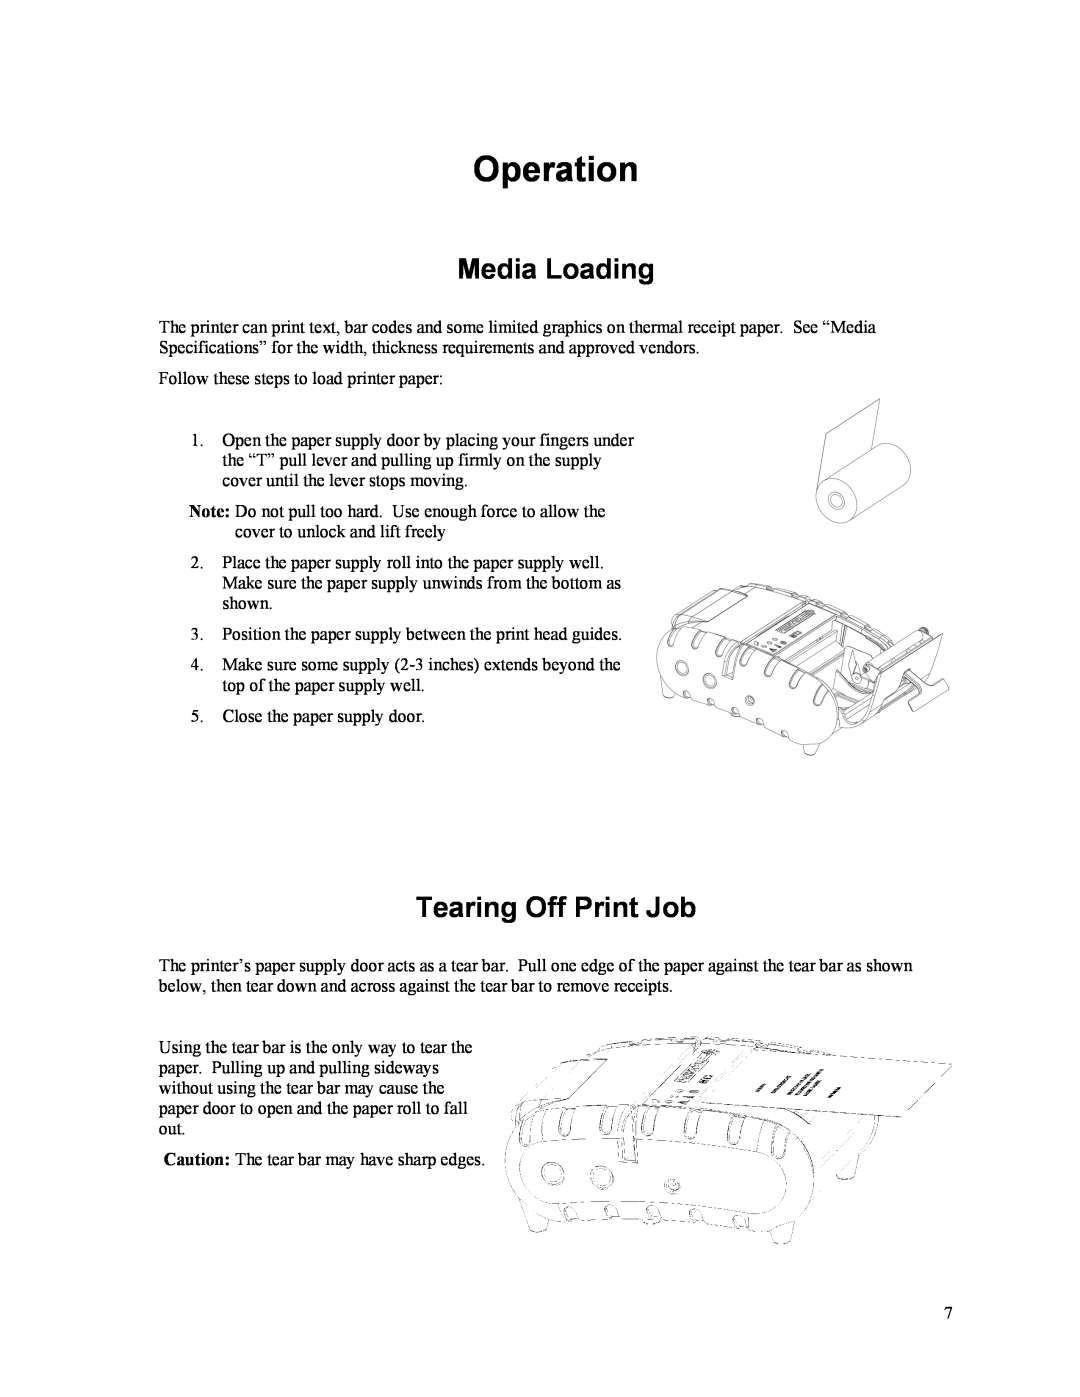 Printek Mt3-II manual Operation, Media Loading, Tearing Off Print Job 